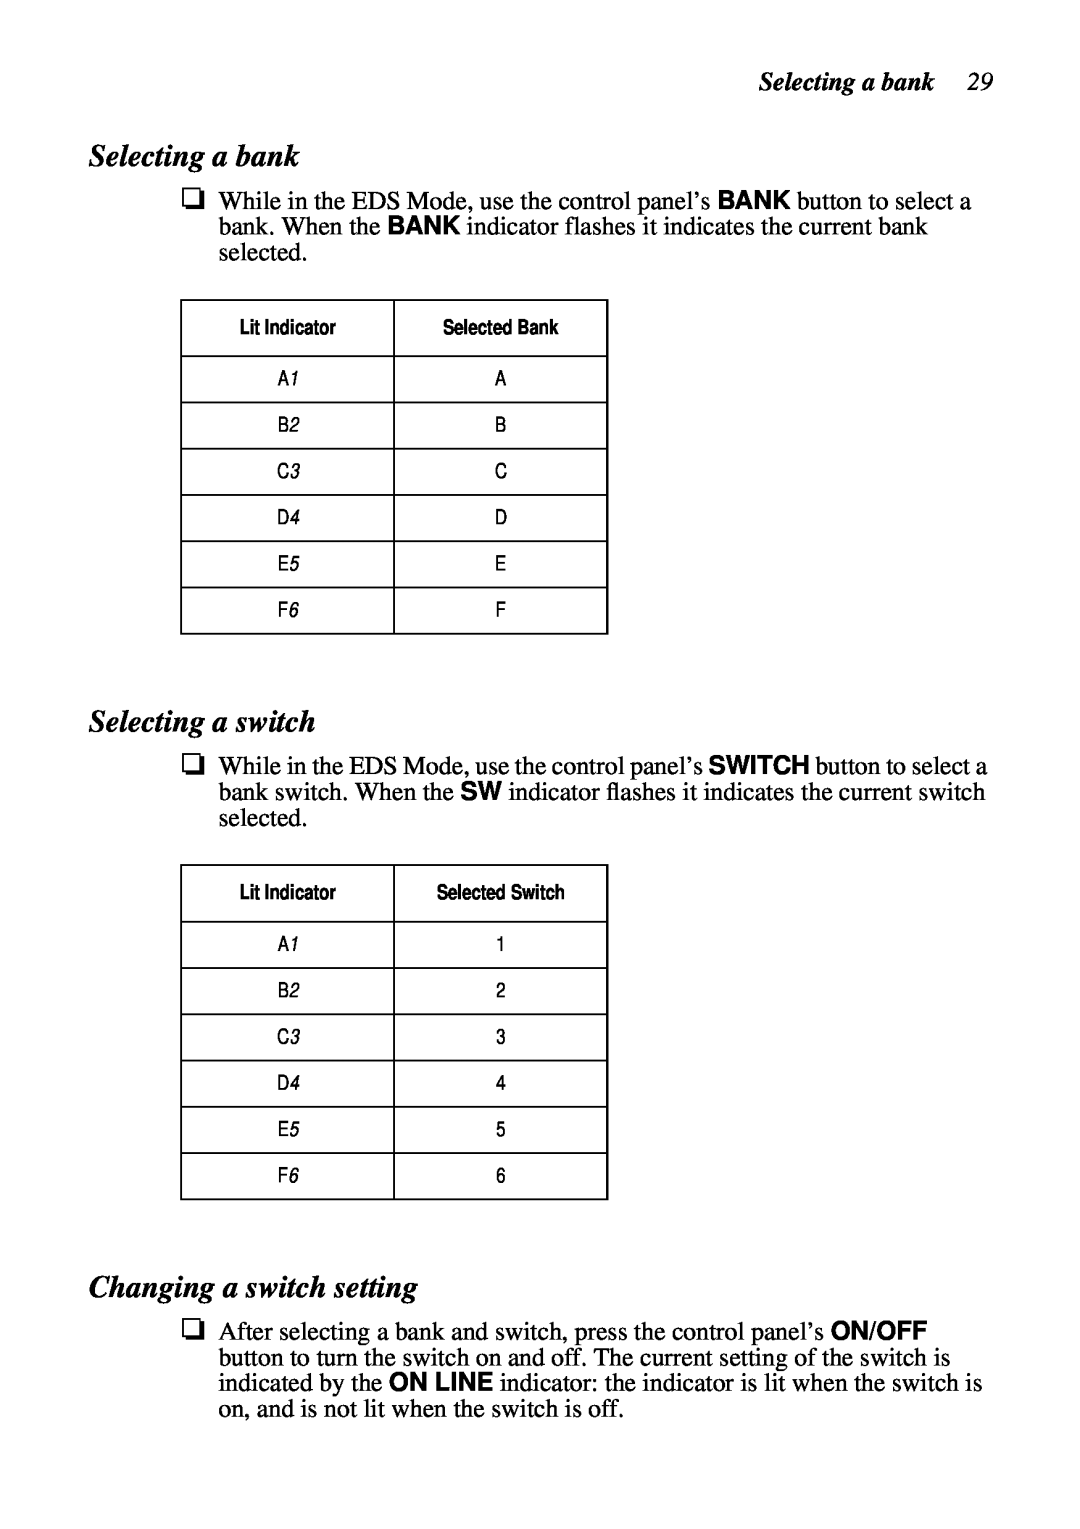 Star Micronics LC-1511, LC-1521, DOT MATRIX PRINTERS Selecting a bank, Selecting a switch, Changing a switch setting 